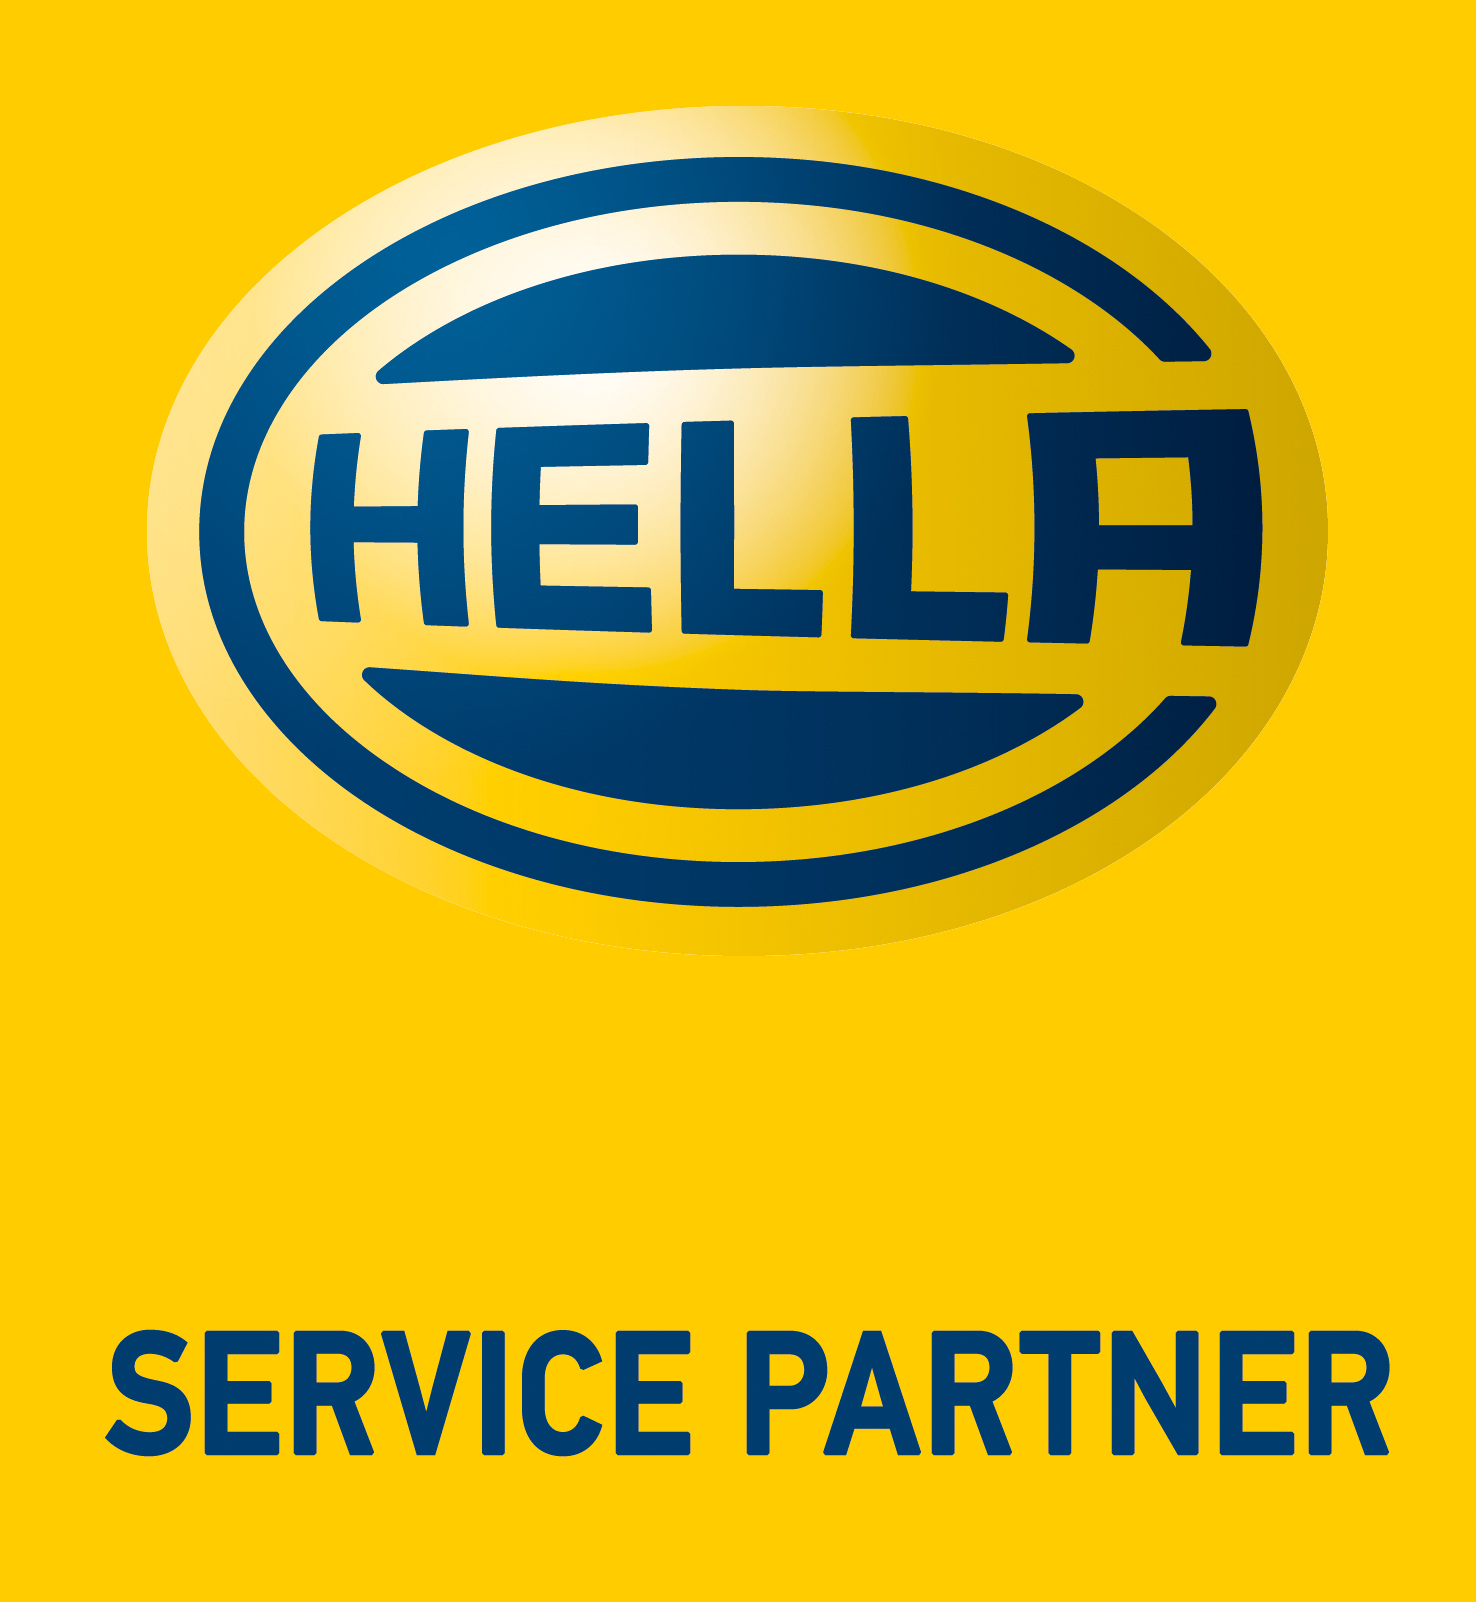 Sønderbæk Auto - Hella Service Partner logo